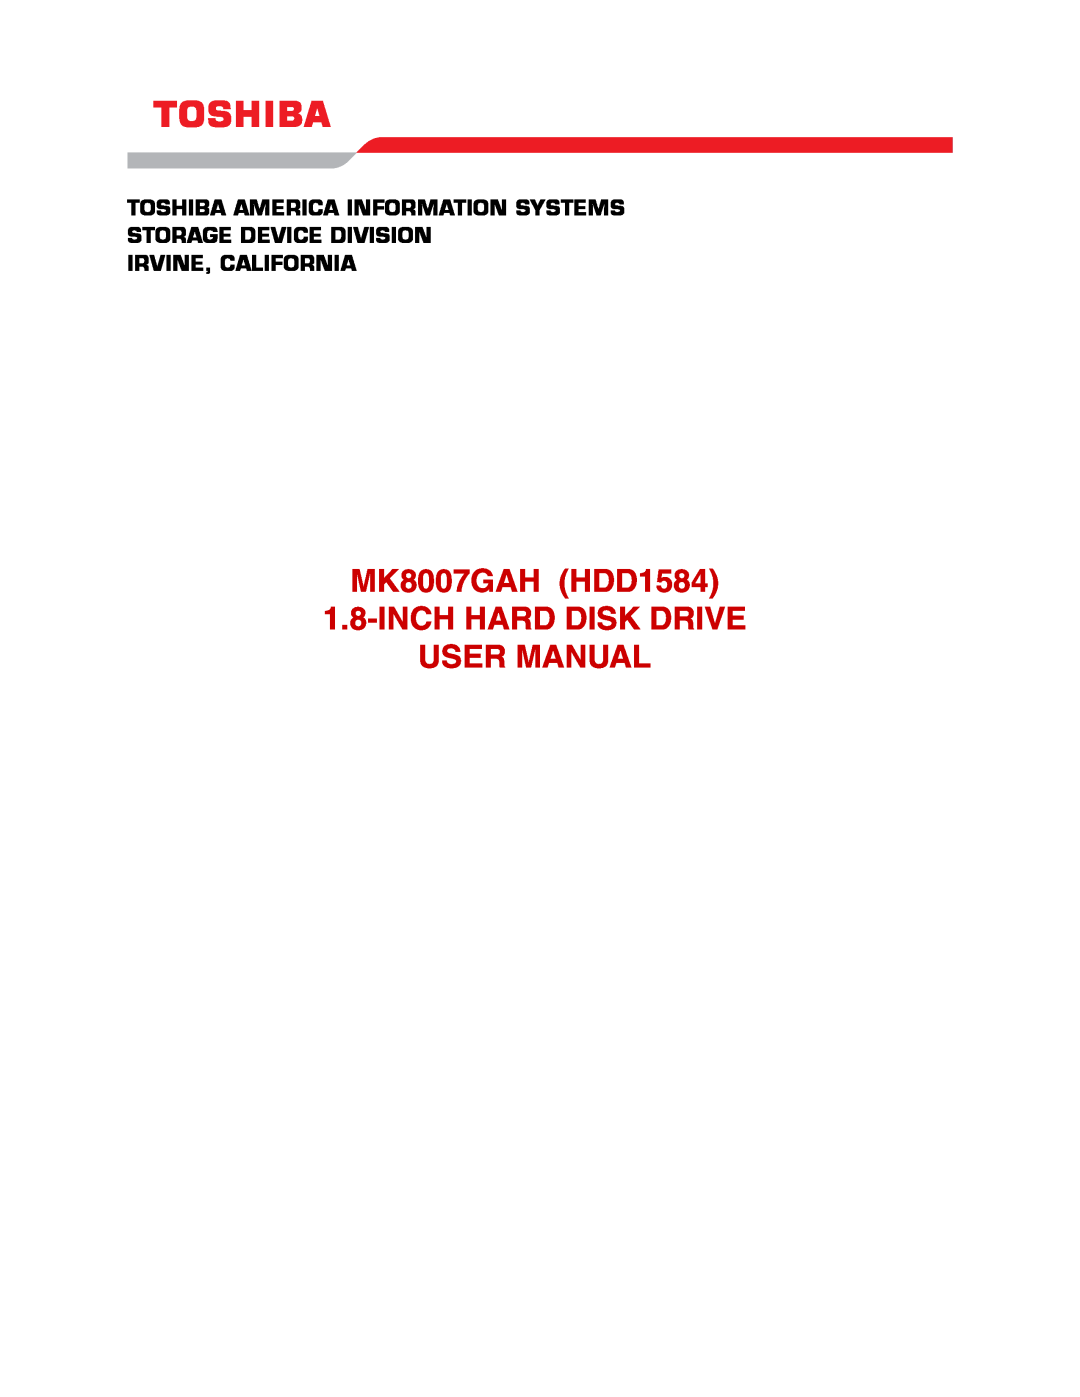 Toshiba MK8007GAH user manual Toshiba America Information Systems Storage Device Division, Irvine, California 